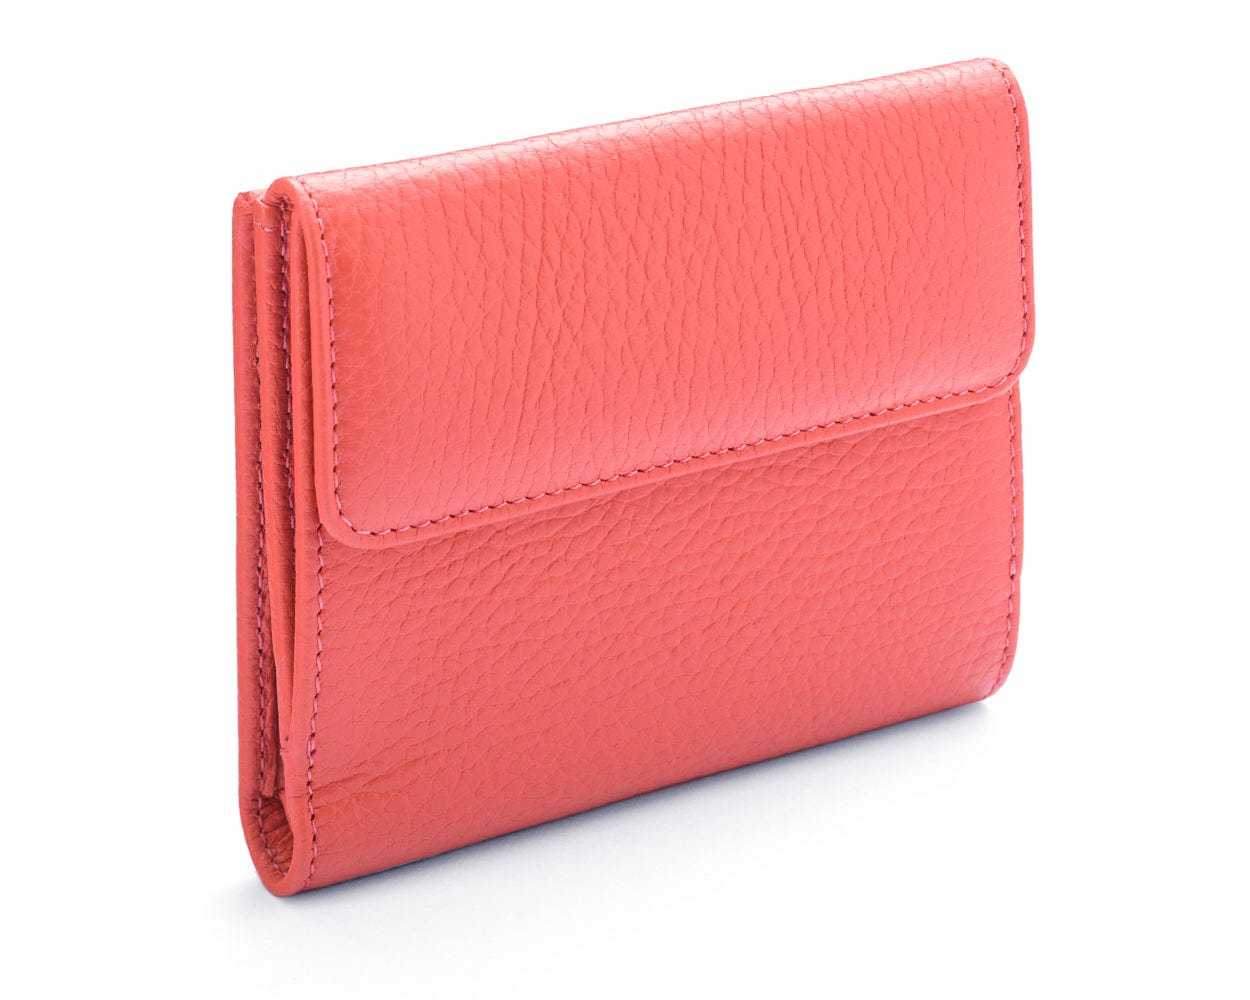 RFID leather purse, pink, back